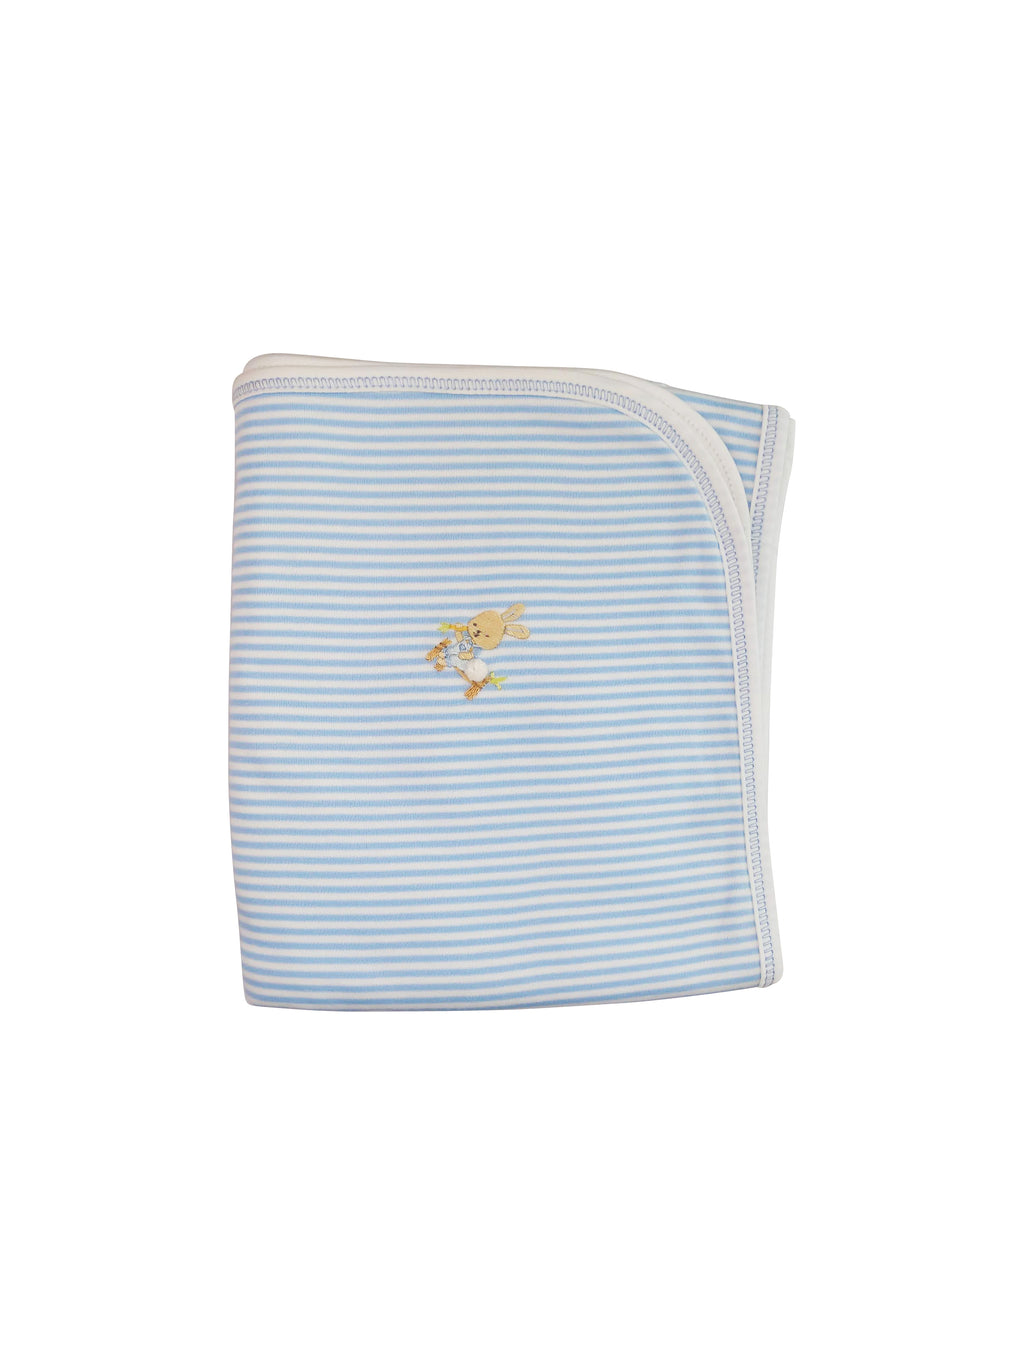 Baby Boy's Blue Striped Bunny Blanket - Little Threads Inc. Children's Clothing